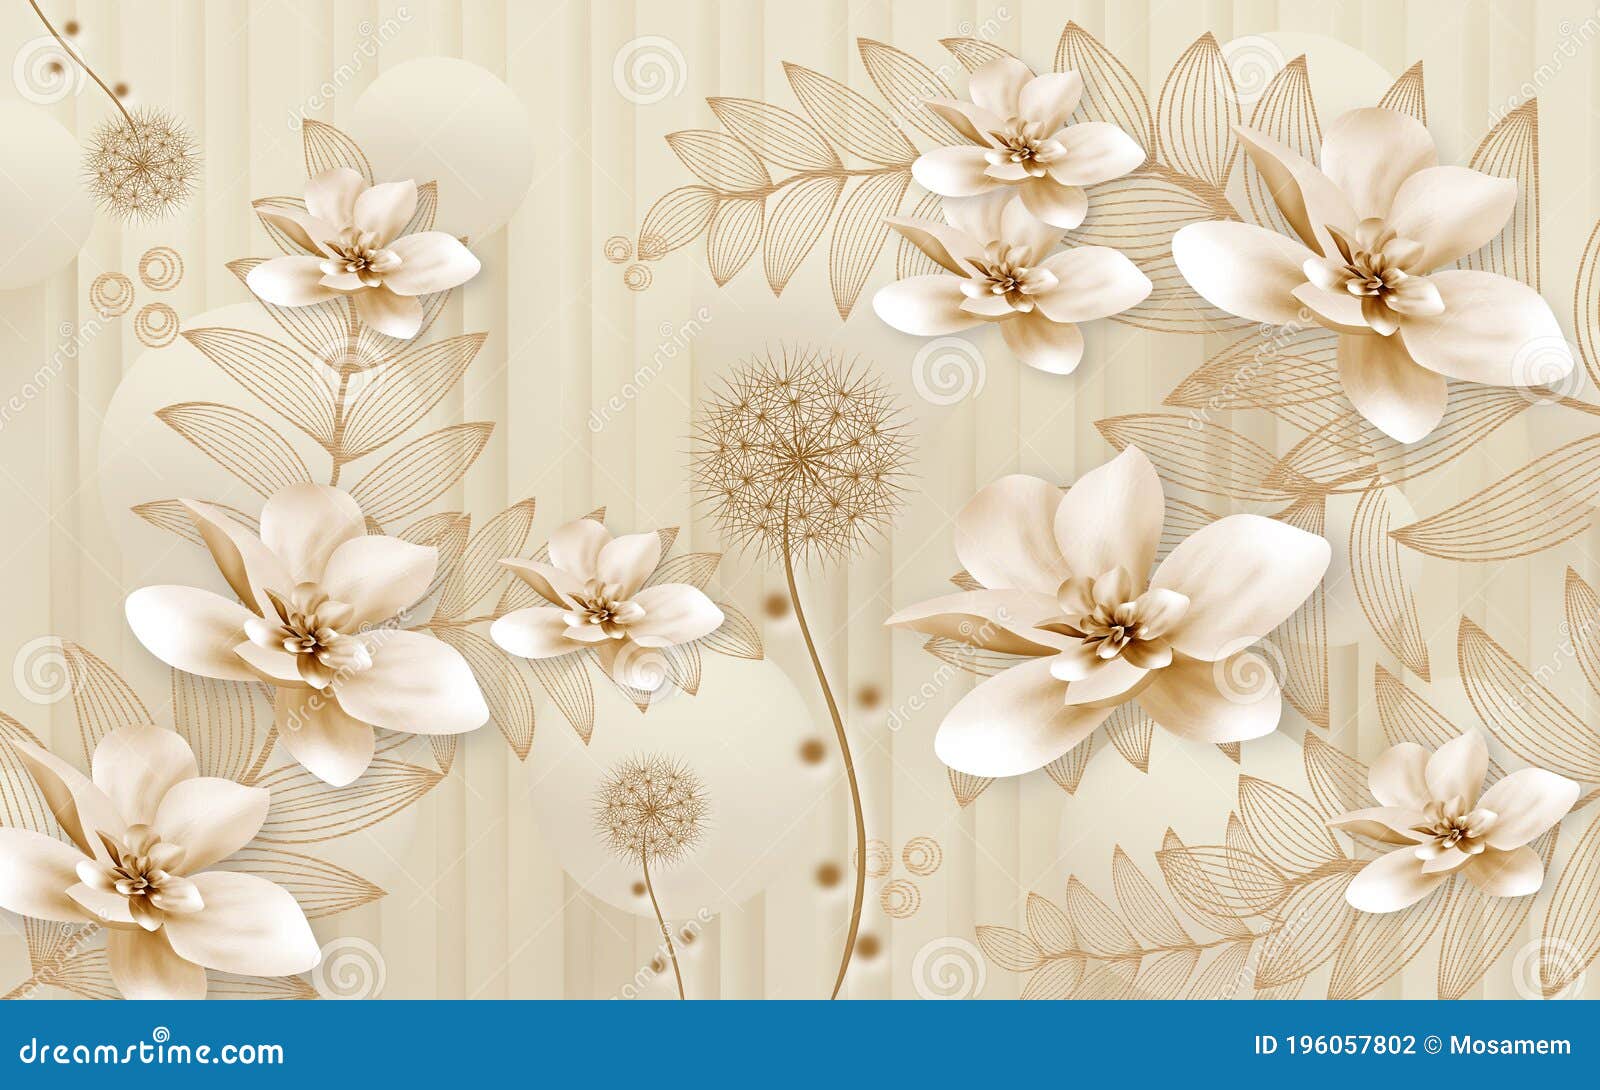 3d Mural Illustration Background with Golden Dandelion Flowers , Circles  Simple Golden Decorative Wallpaper Stock Illustration - Illustration of  floral, antique: 196057802